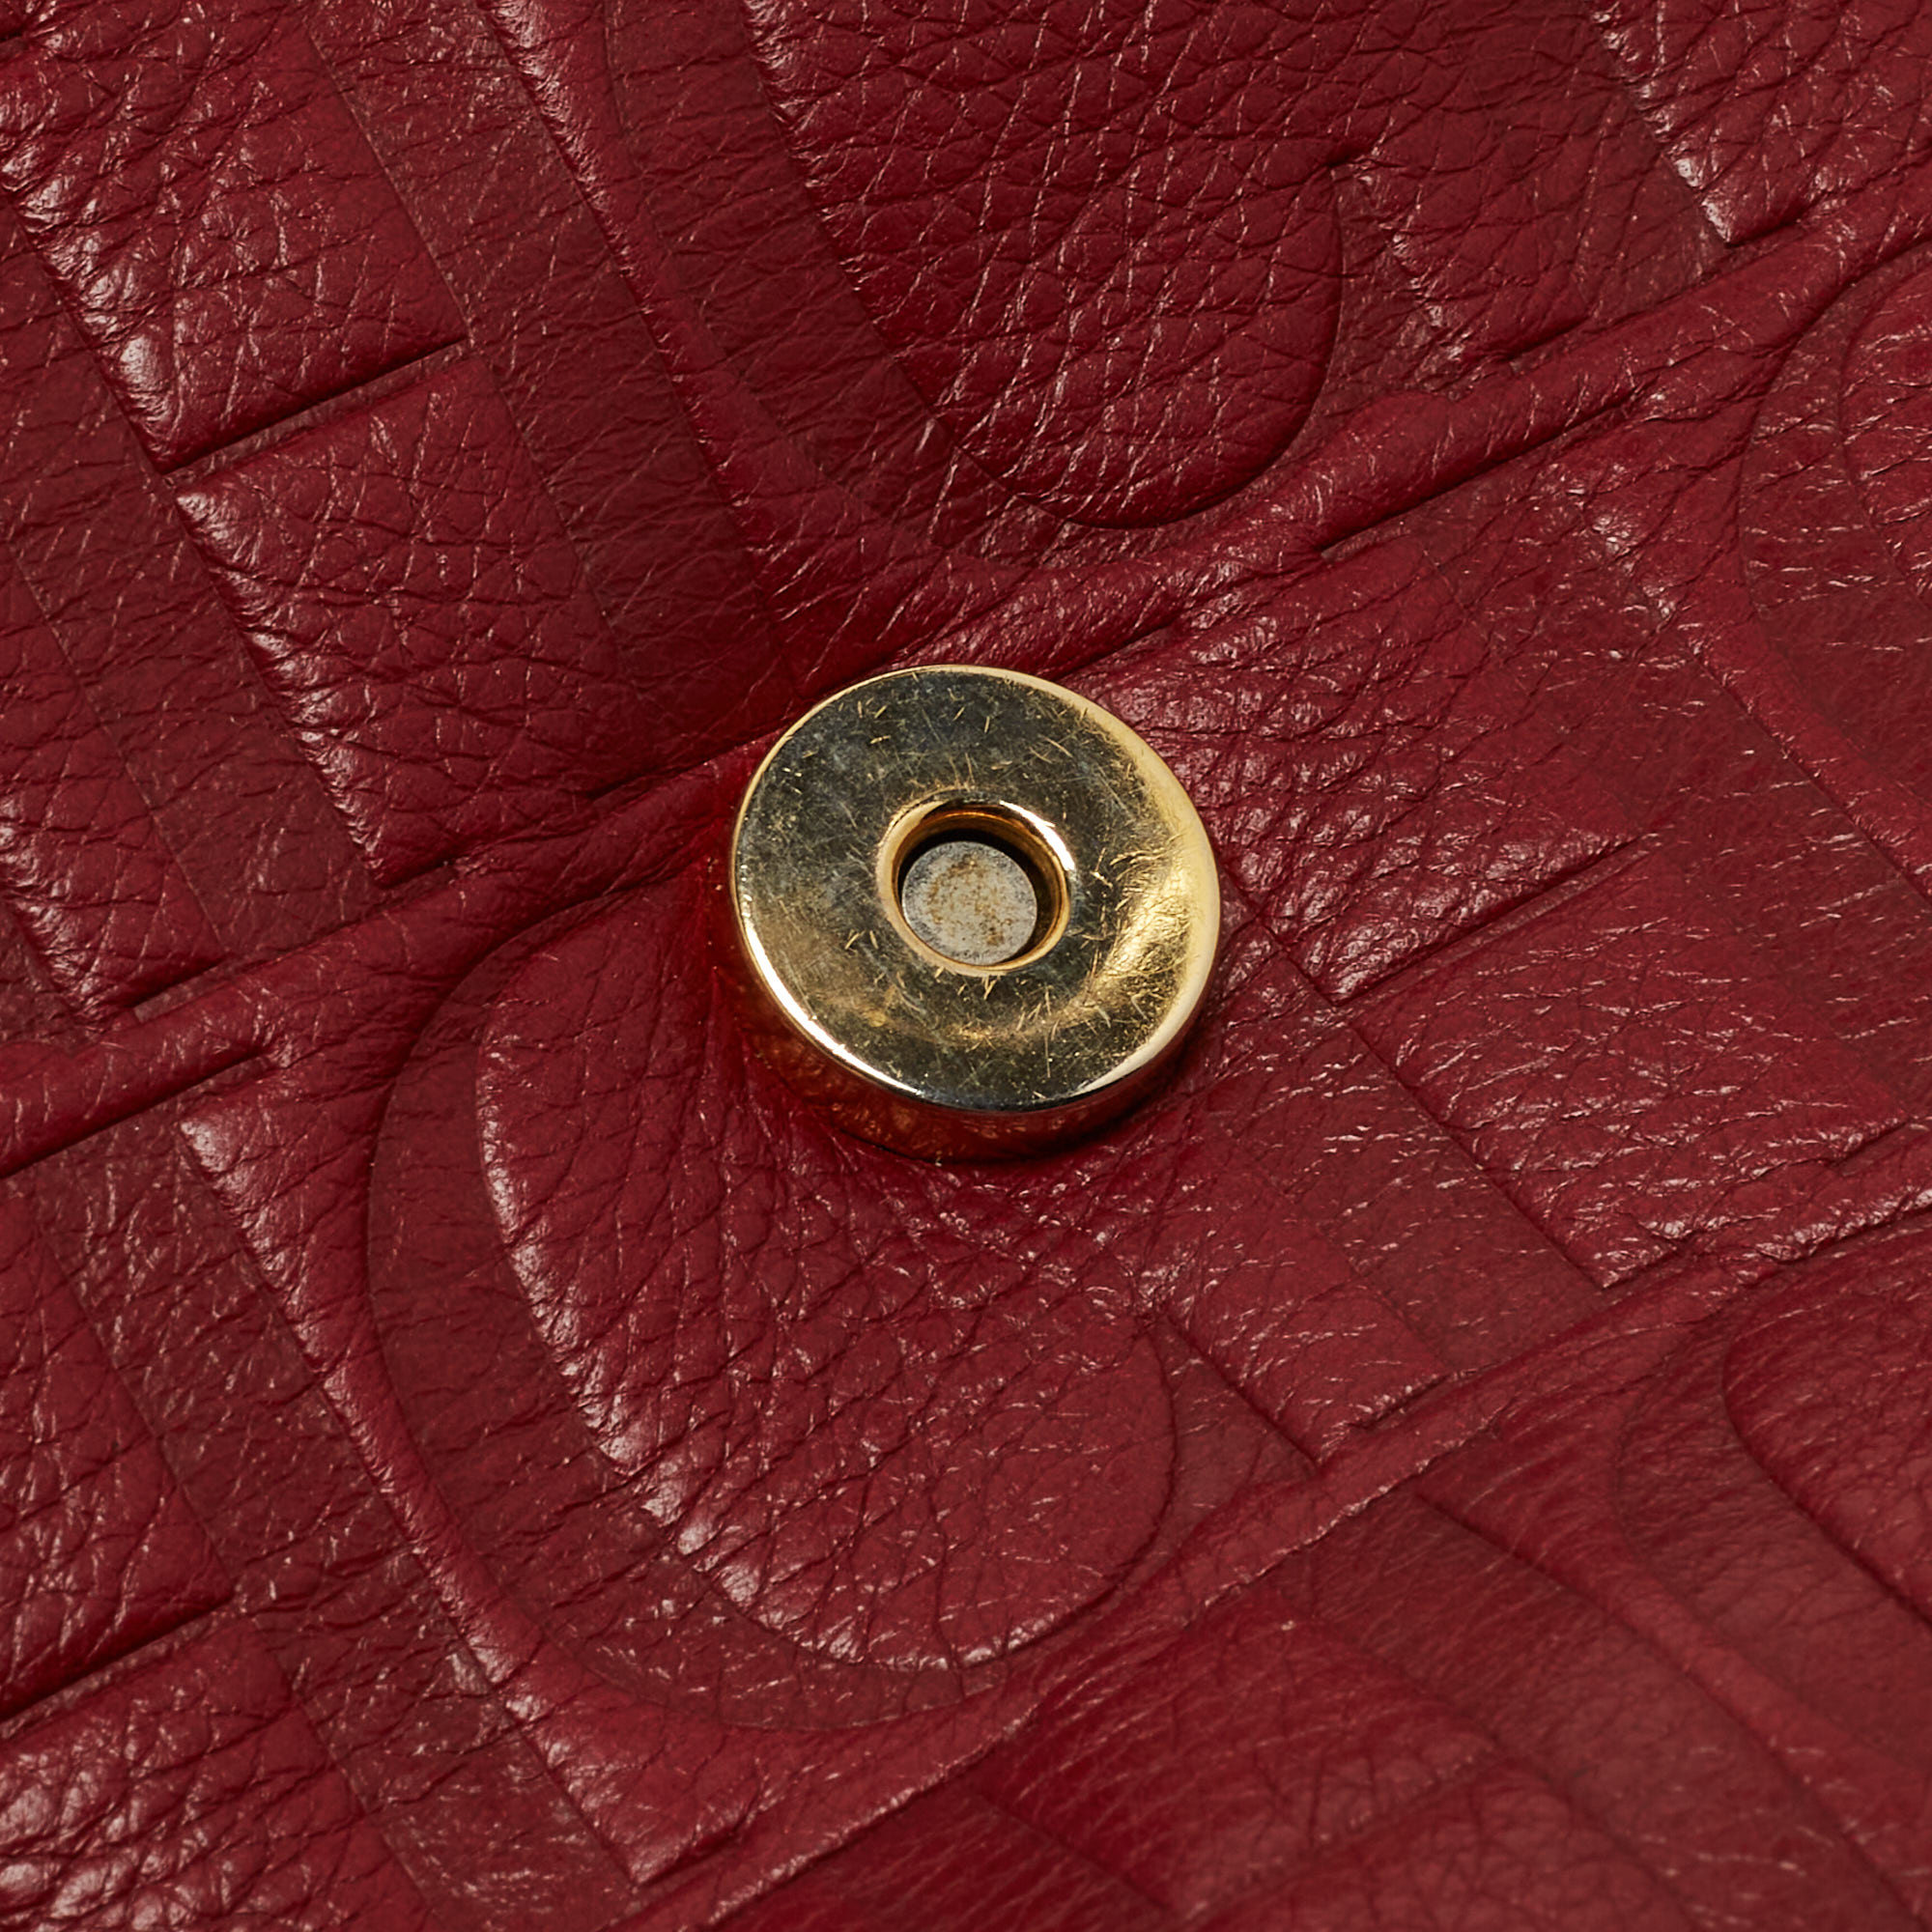 Carolina Herrera Red Monogram Embossed Leather Bow Shoulder Bag